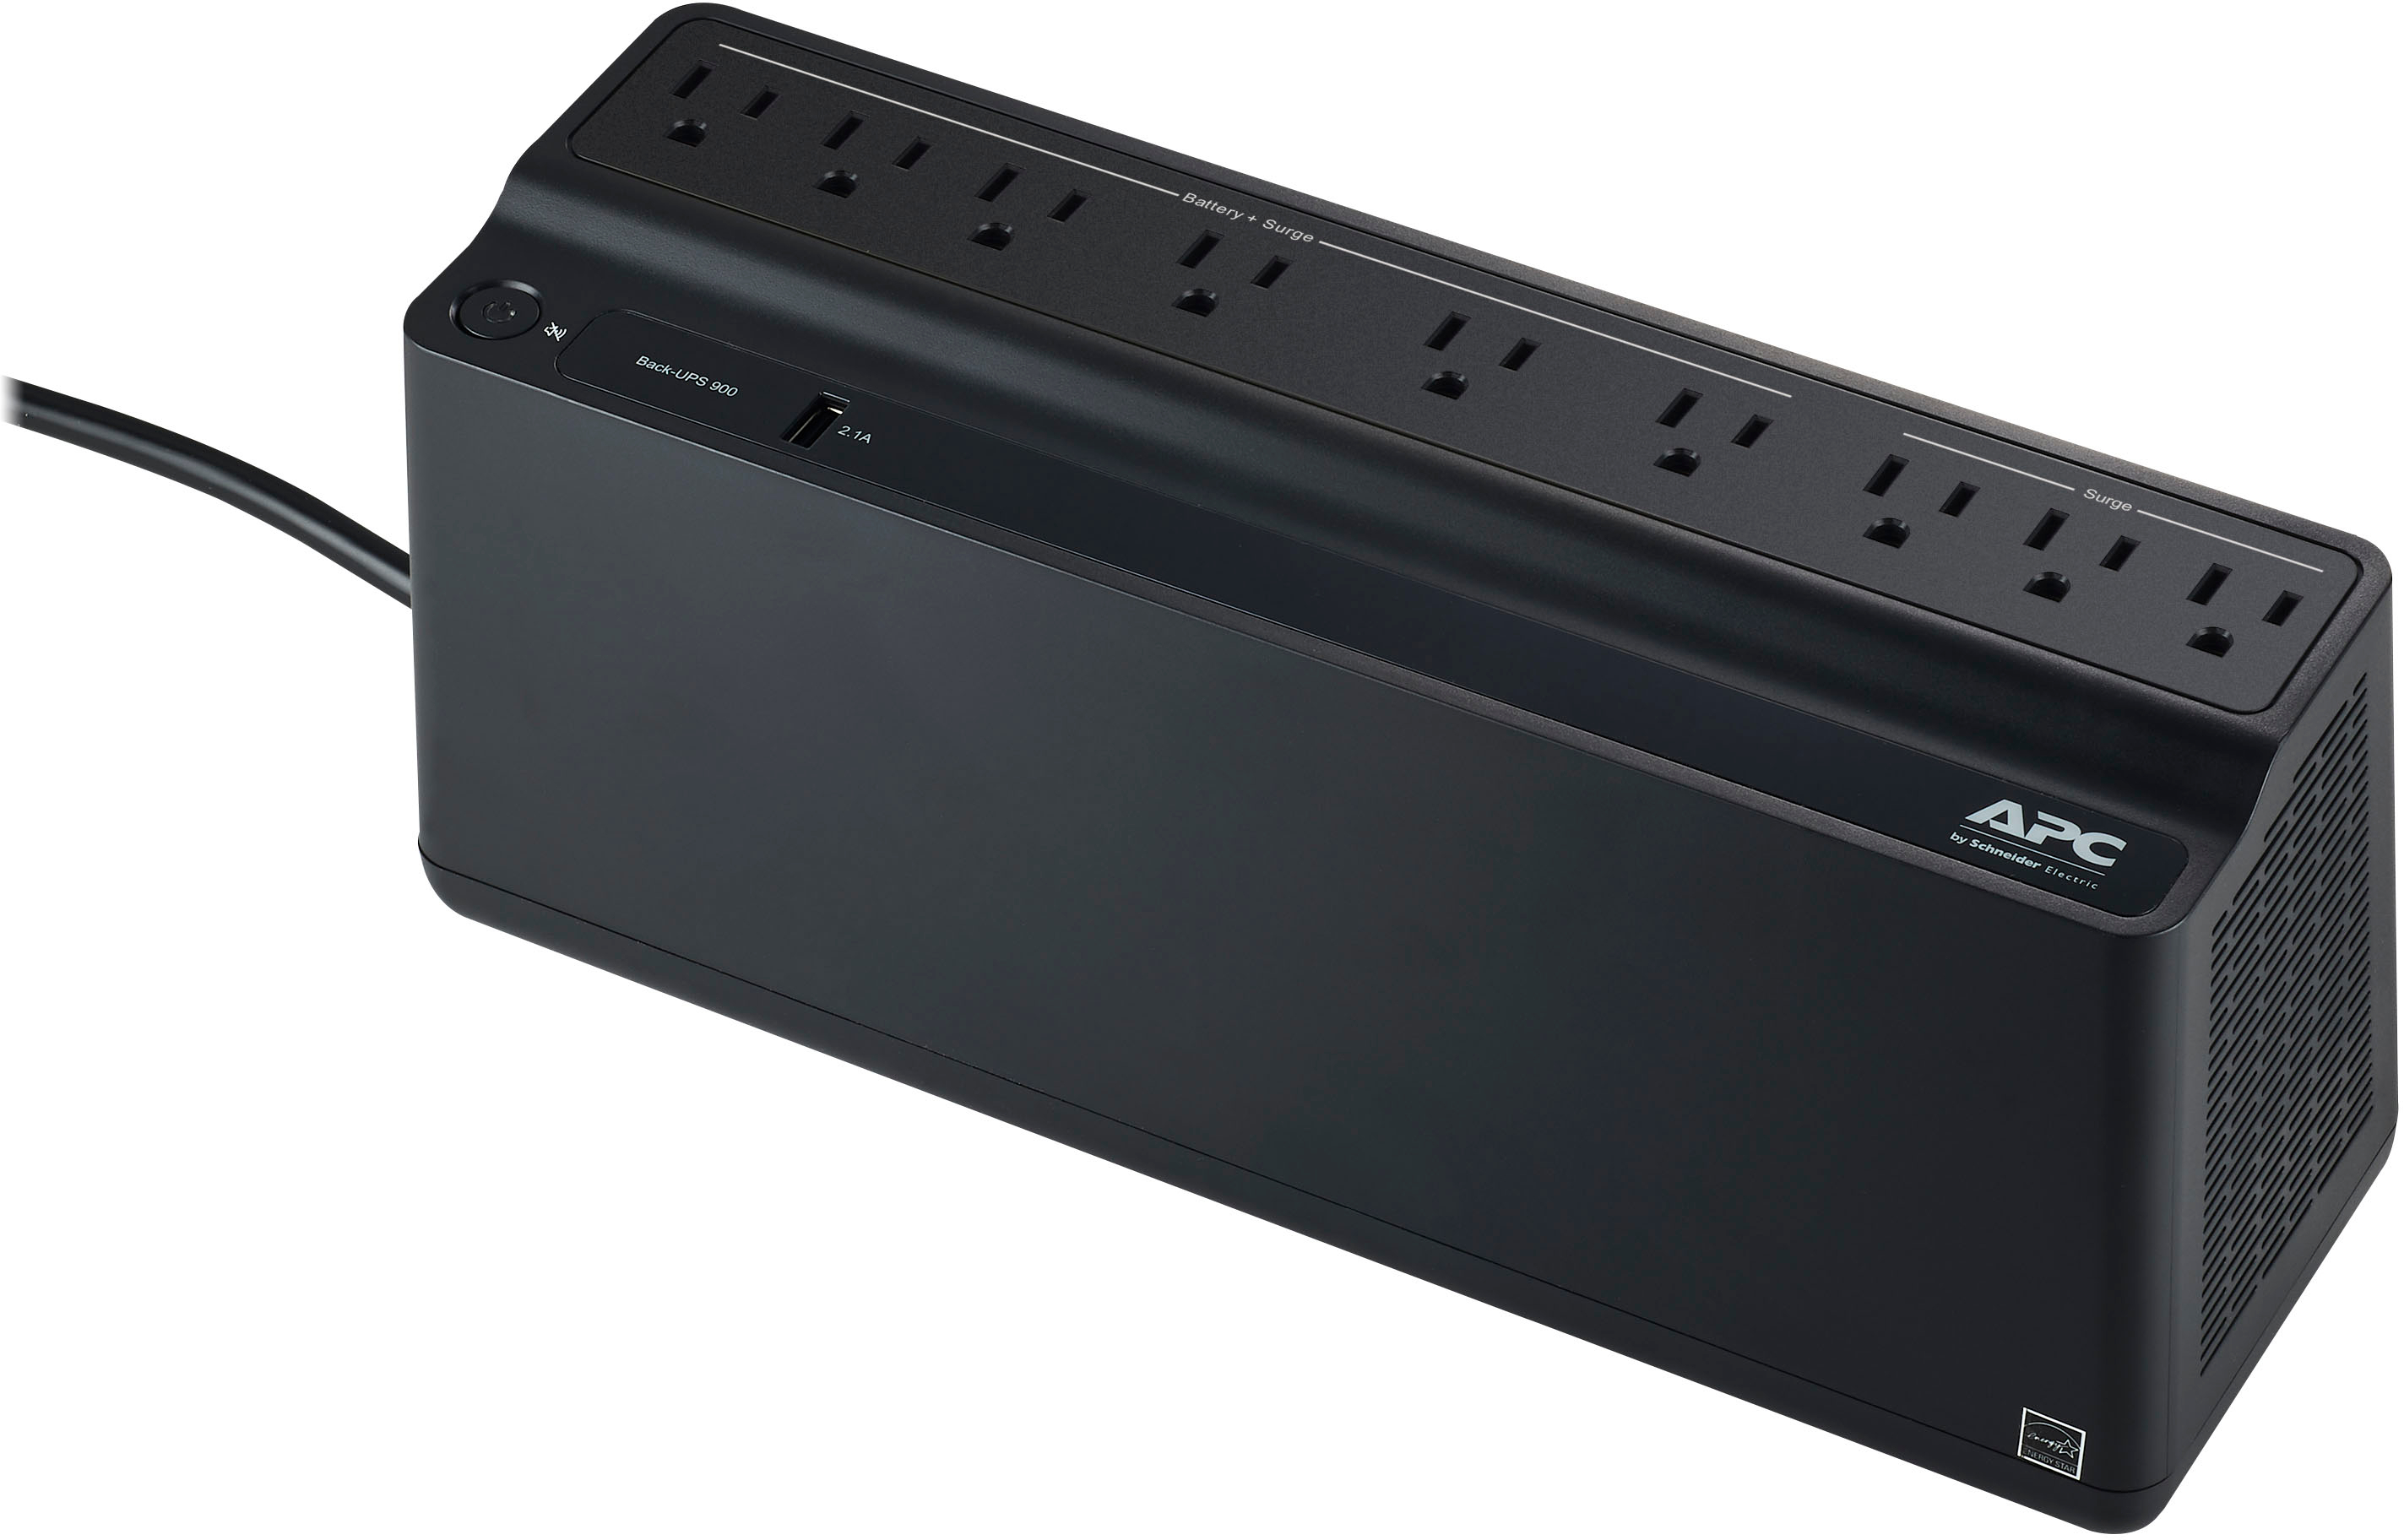 BN1050M - APC Back-UPS Pro 1050VA Retail, 1050VA, 600W, 8 outlets